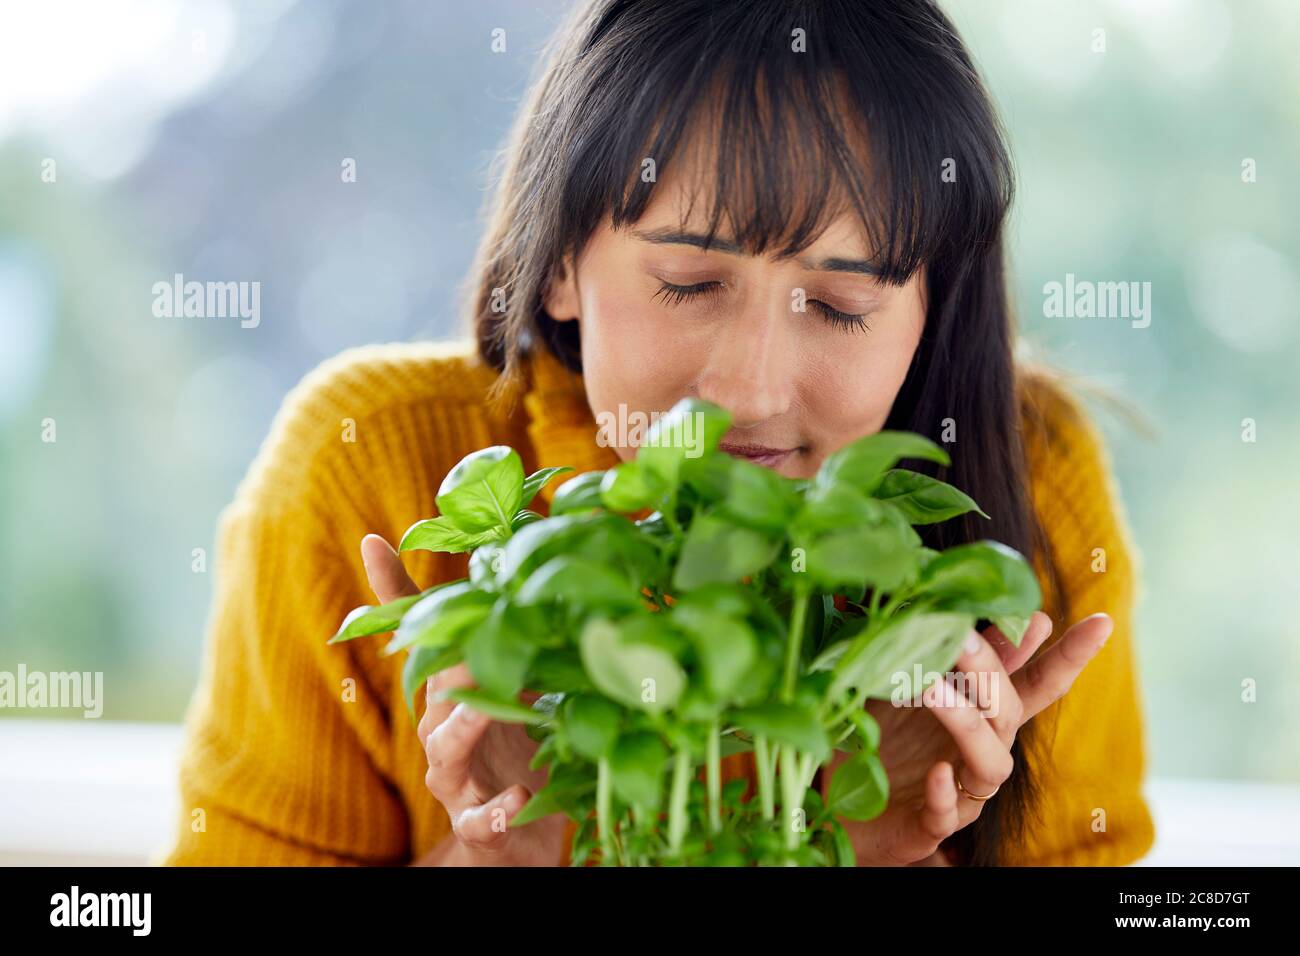 Woman picking basil leaves Stock Photo